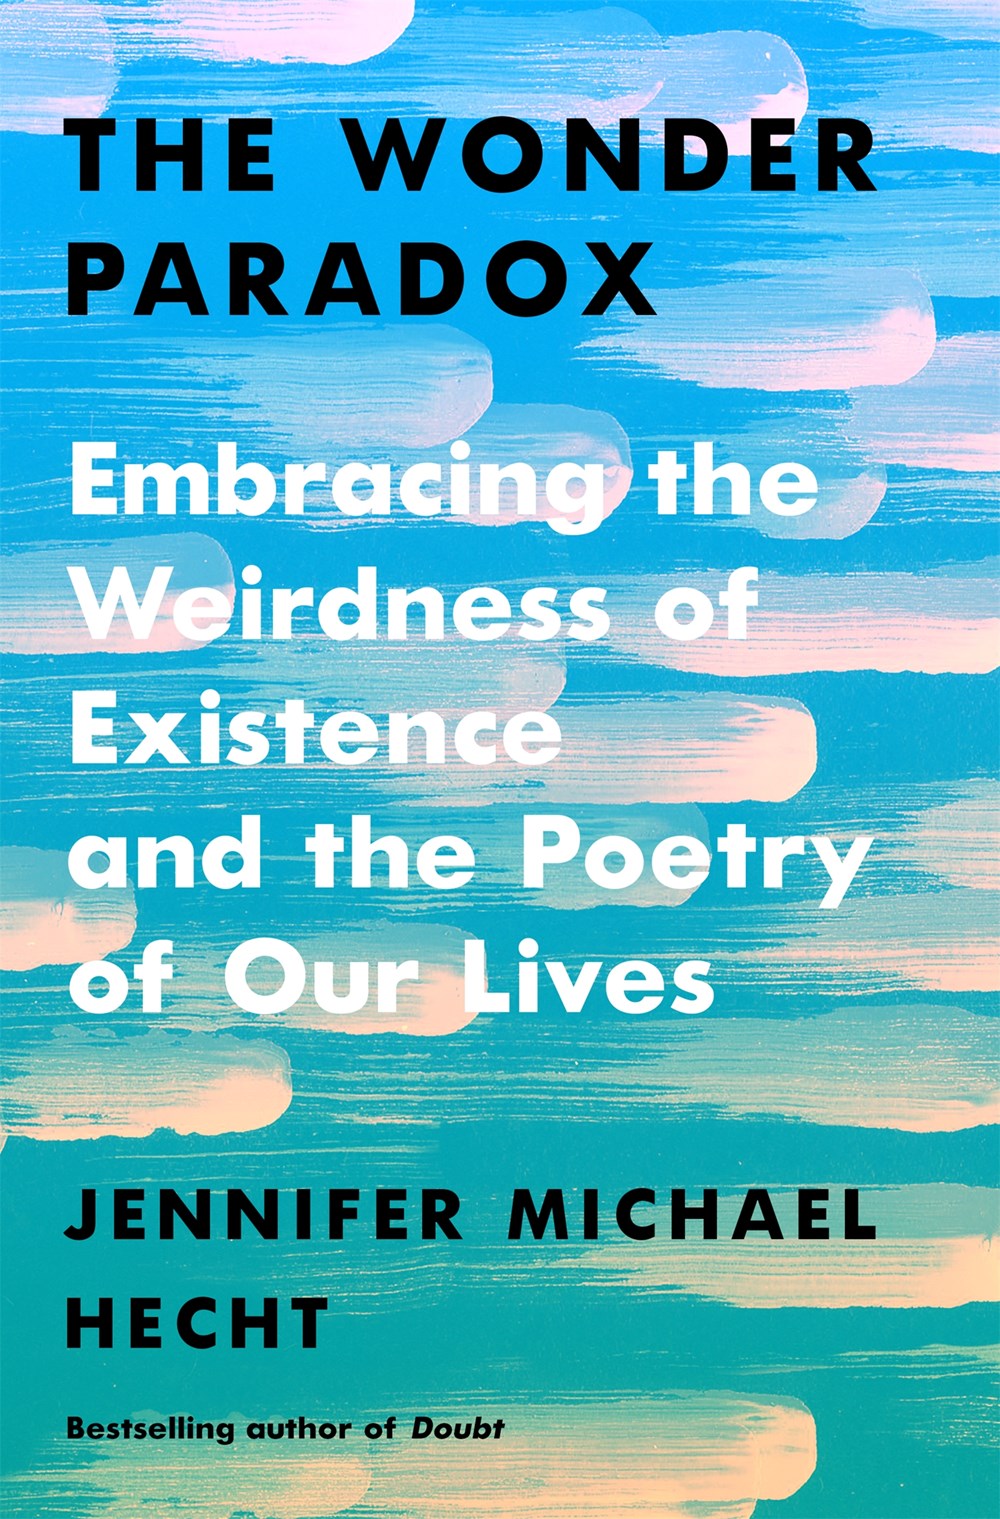 The Wonder Paradox by Jennifer Michael Hecht